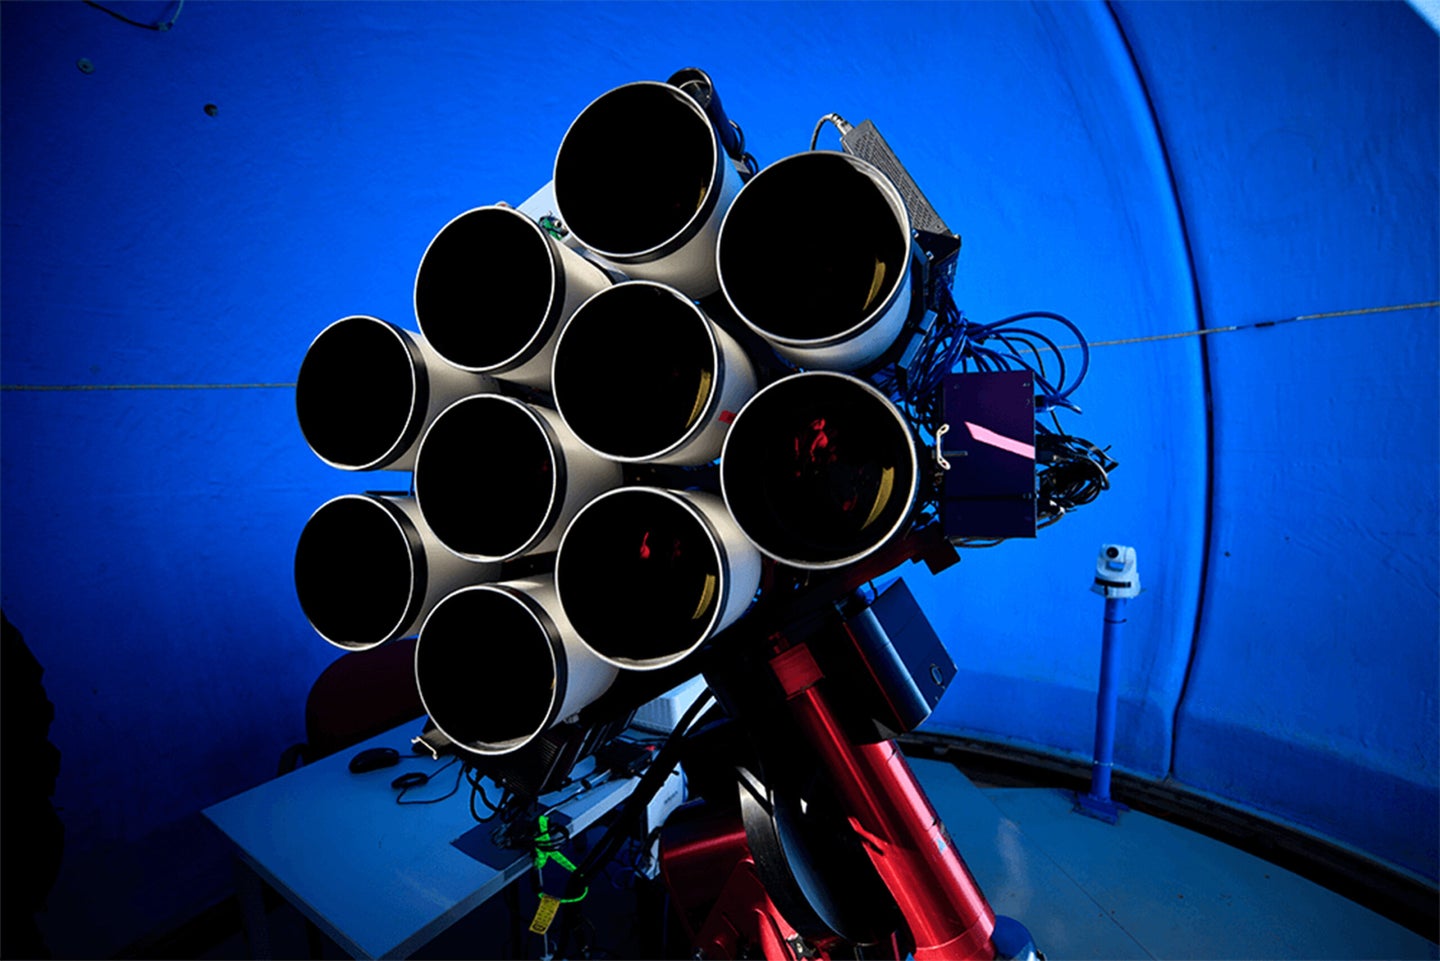 The Huntsman Telescope comprises 10 Canon EF 400mm f/2.8 L IS II super-telephoto lenses